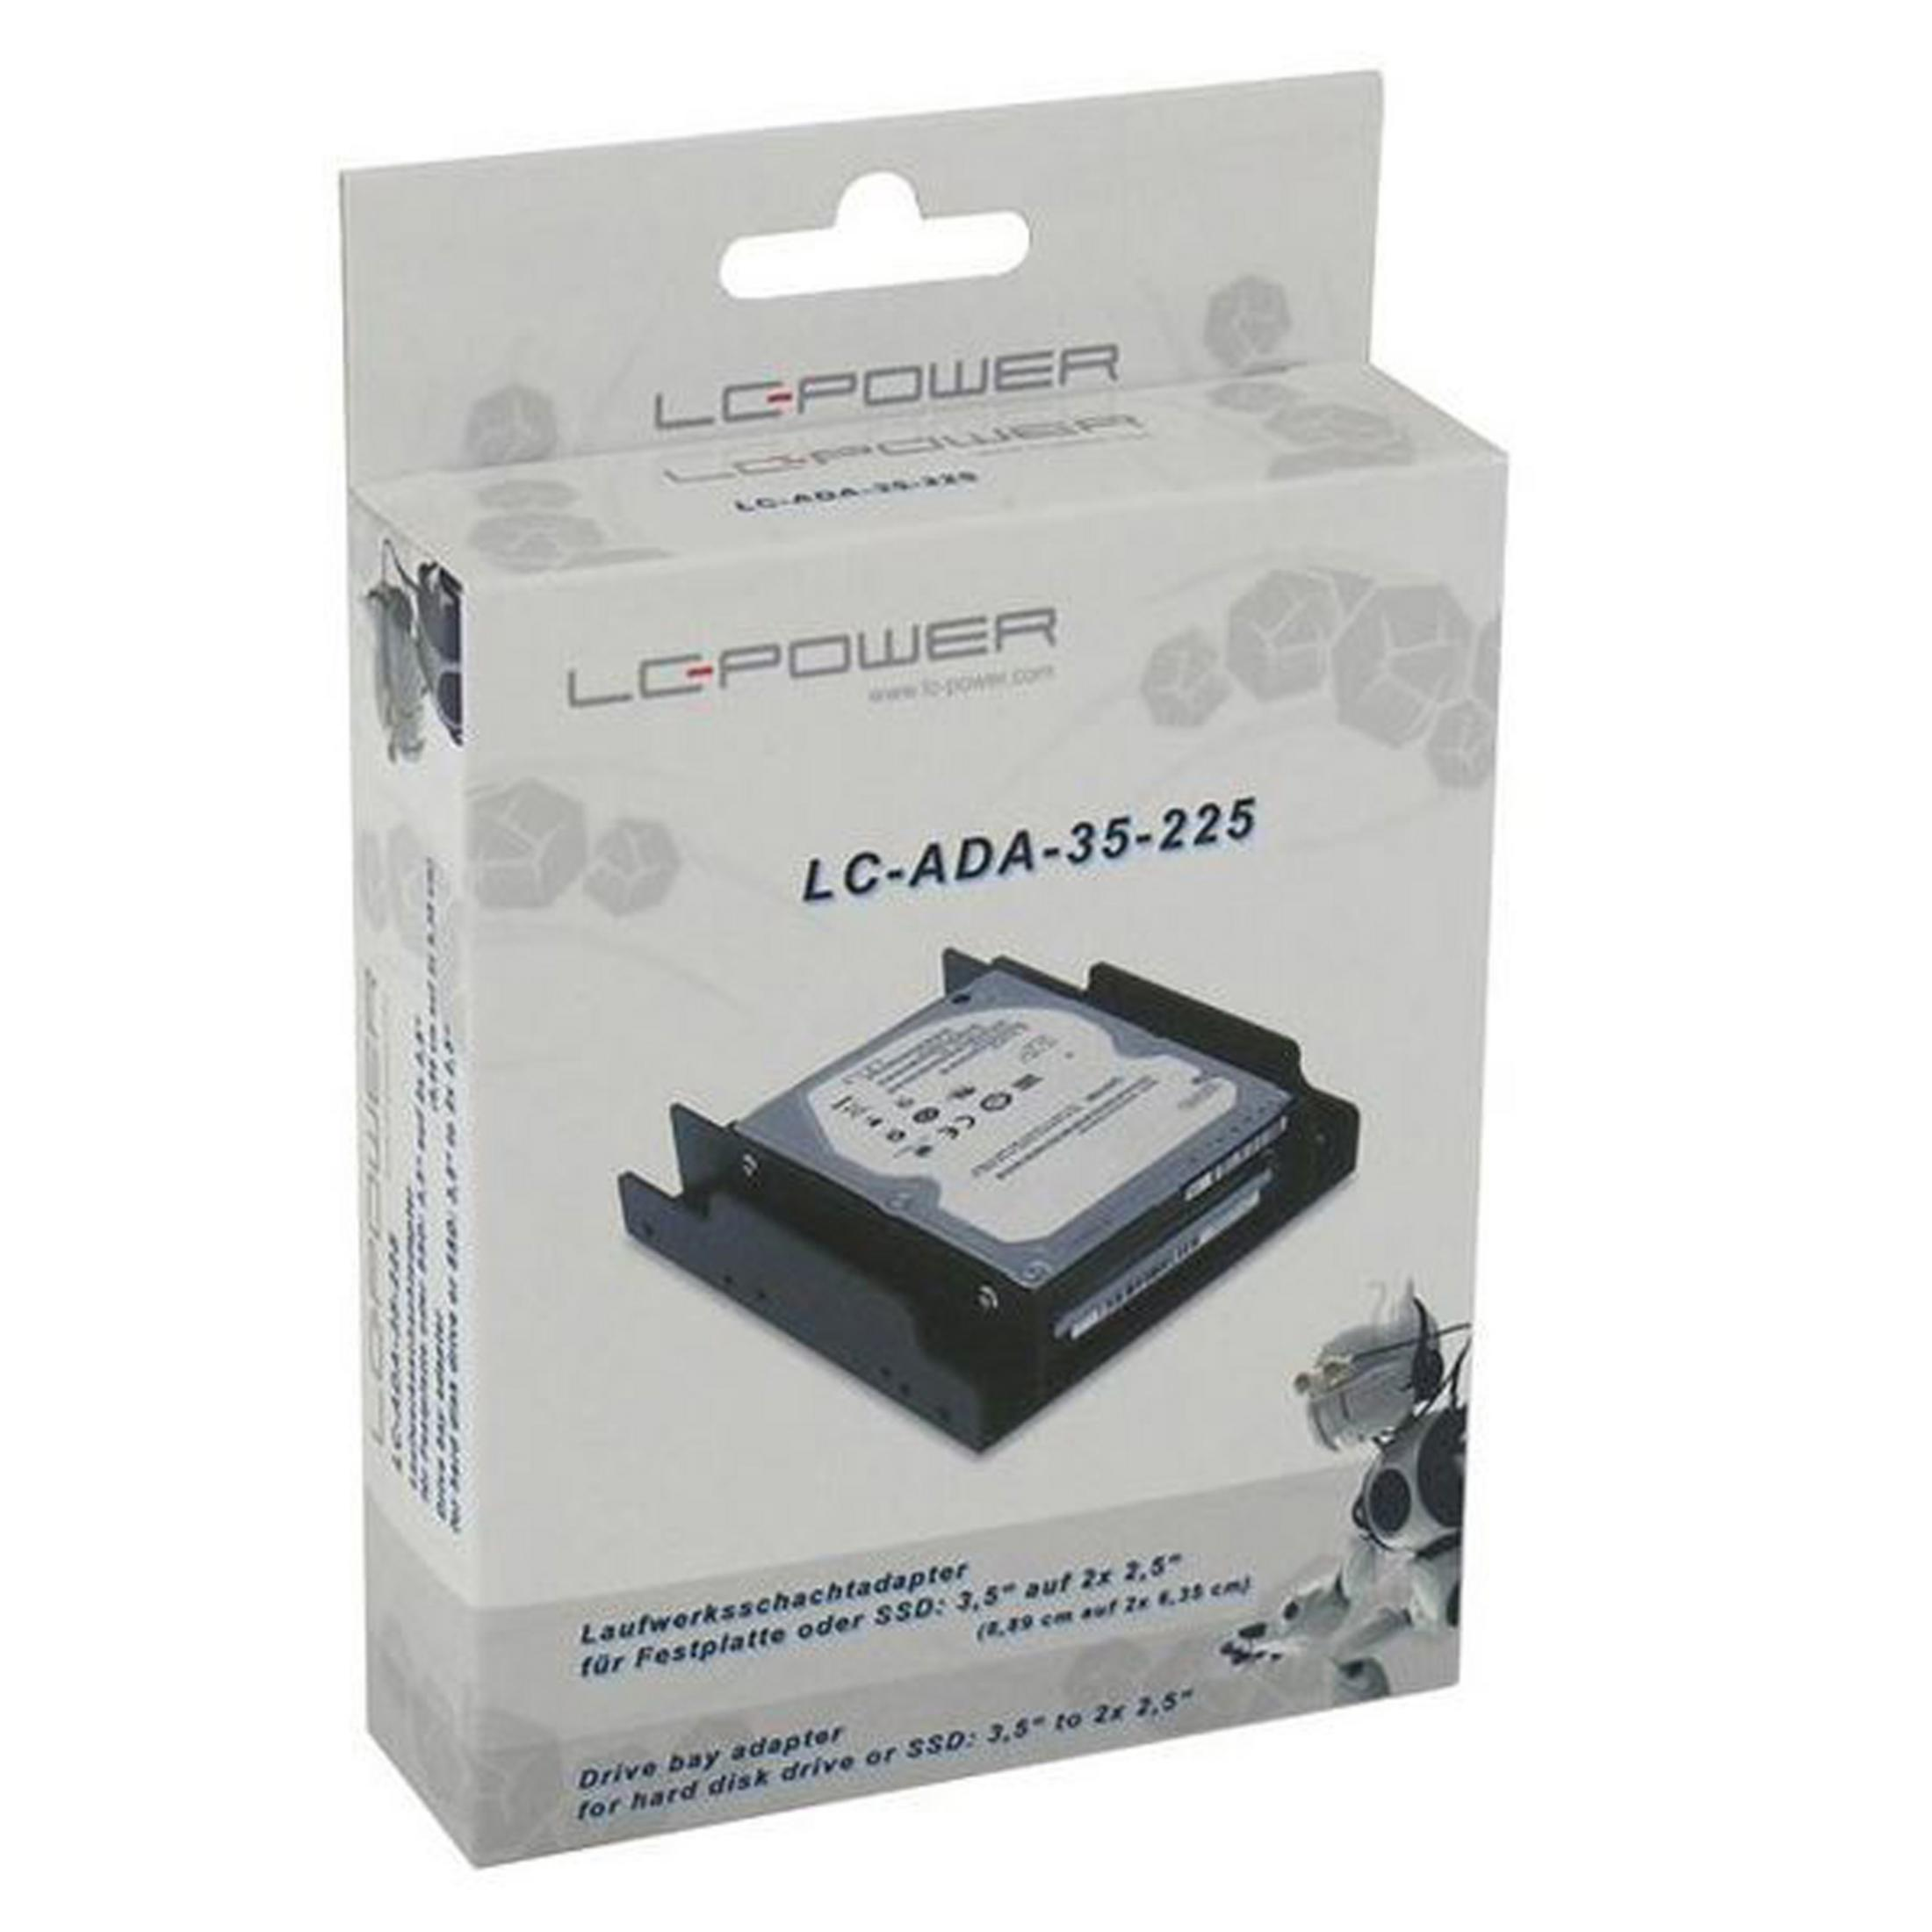 LC POWER EINBAURAHMEN, Festplattenadapter LC-ADA-35-225